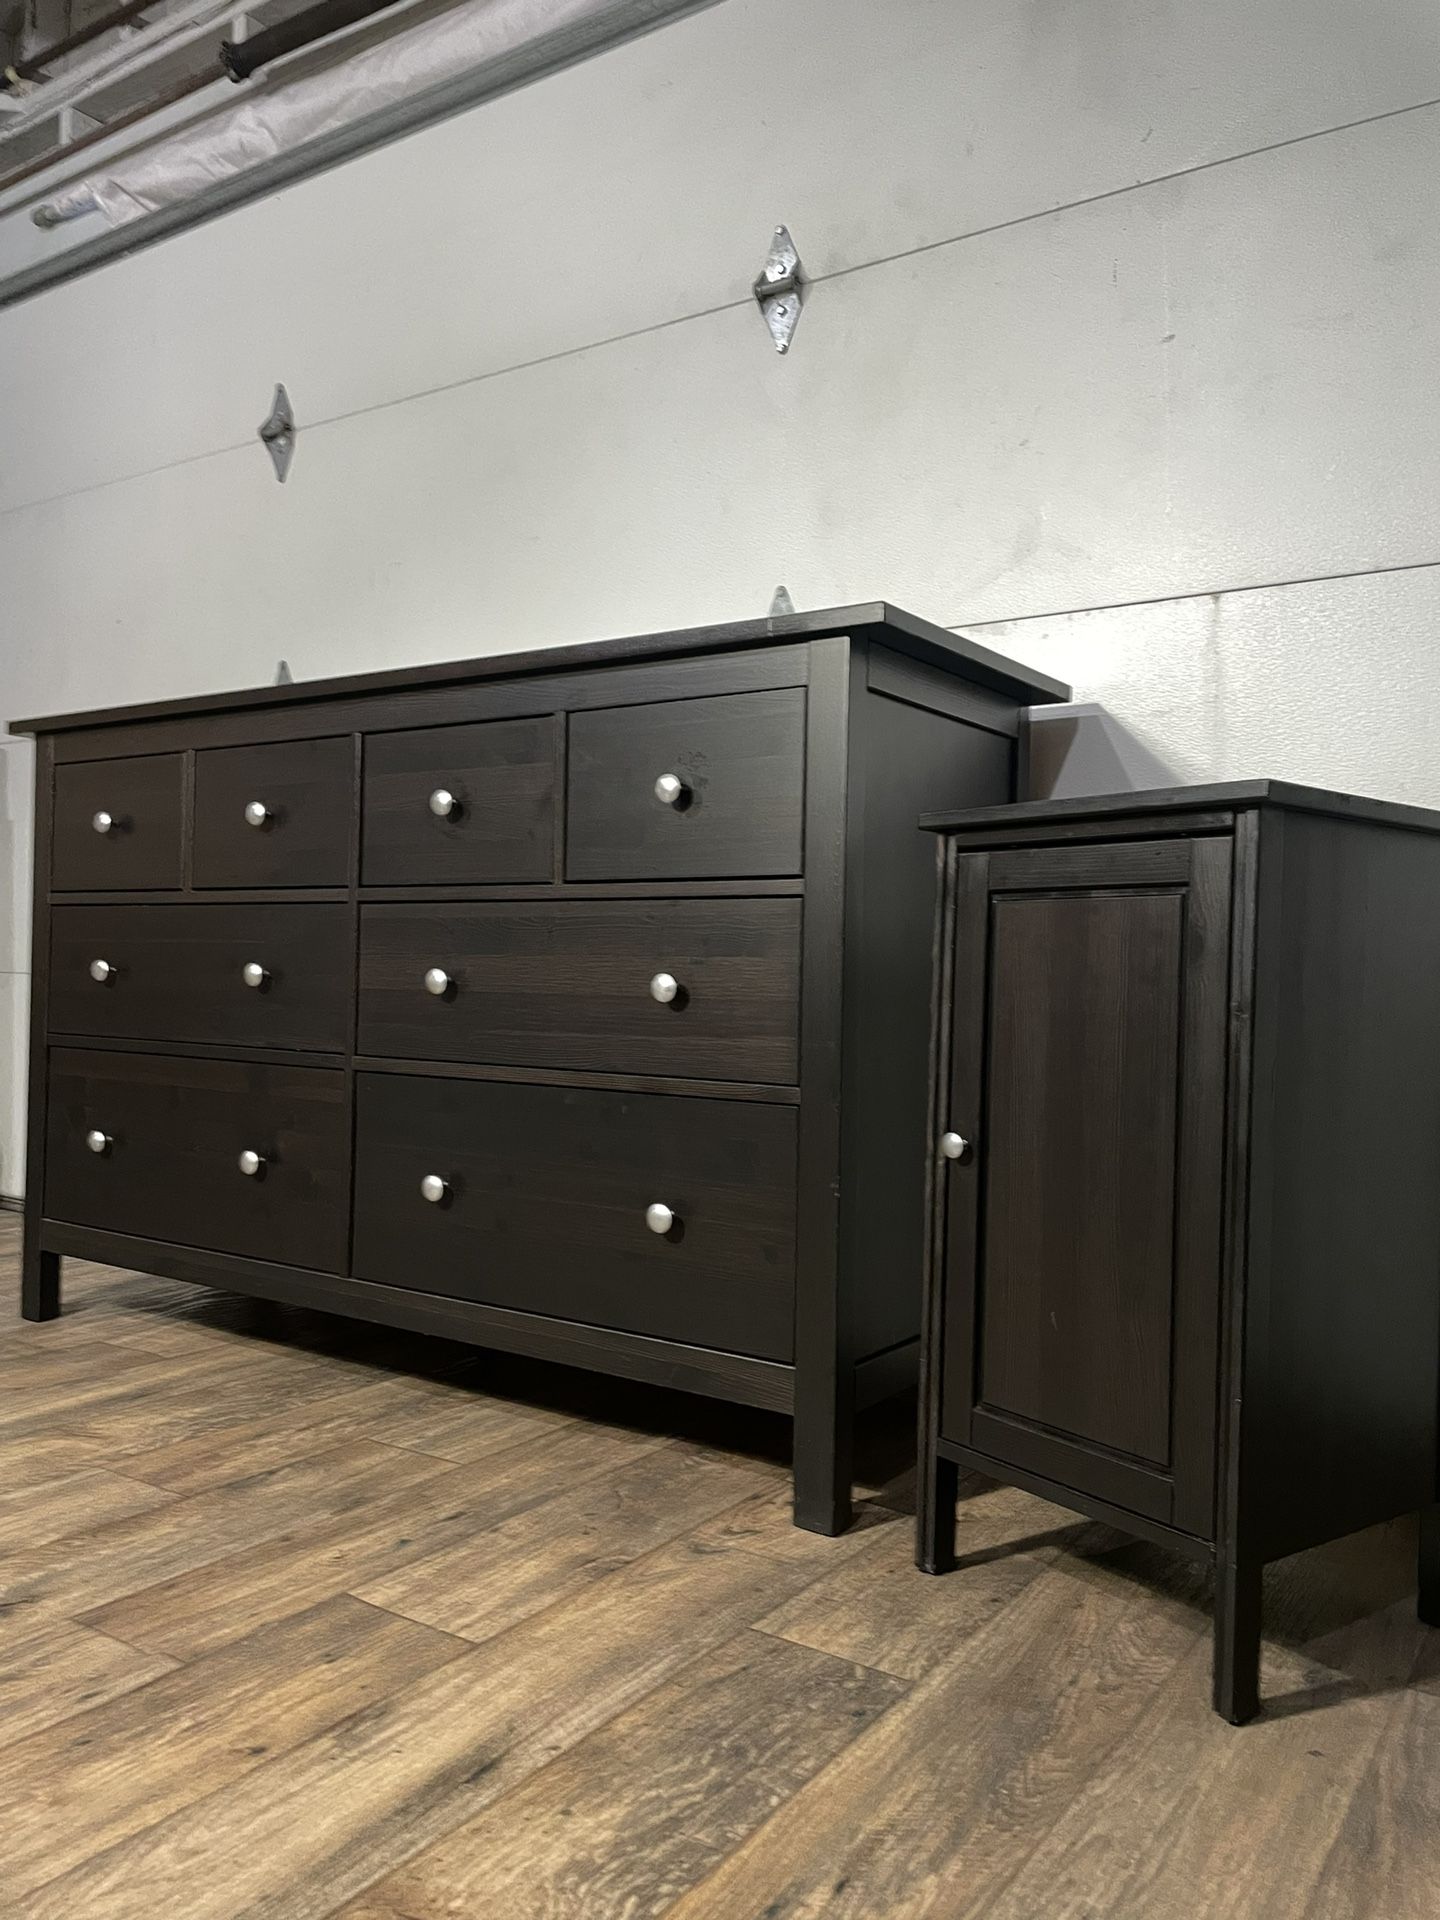 IKEA HEMNES 8-Drawer Dresser & Nightstand Set, Black-Brown Finish